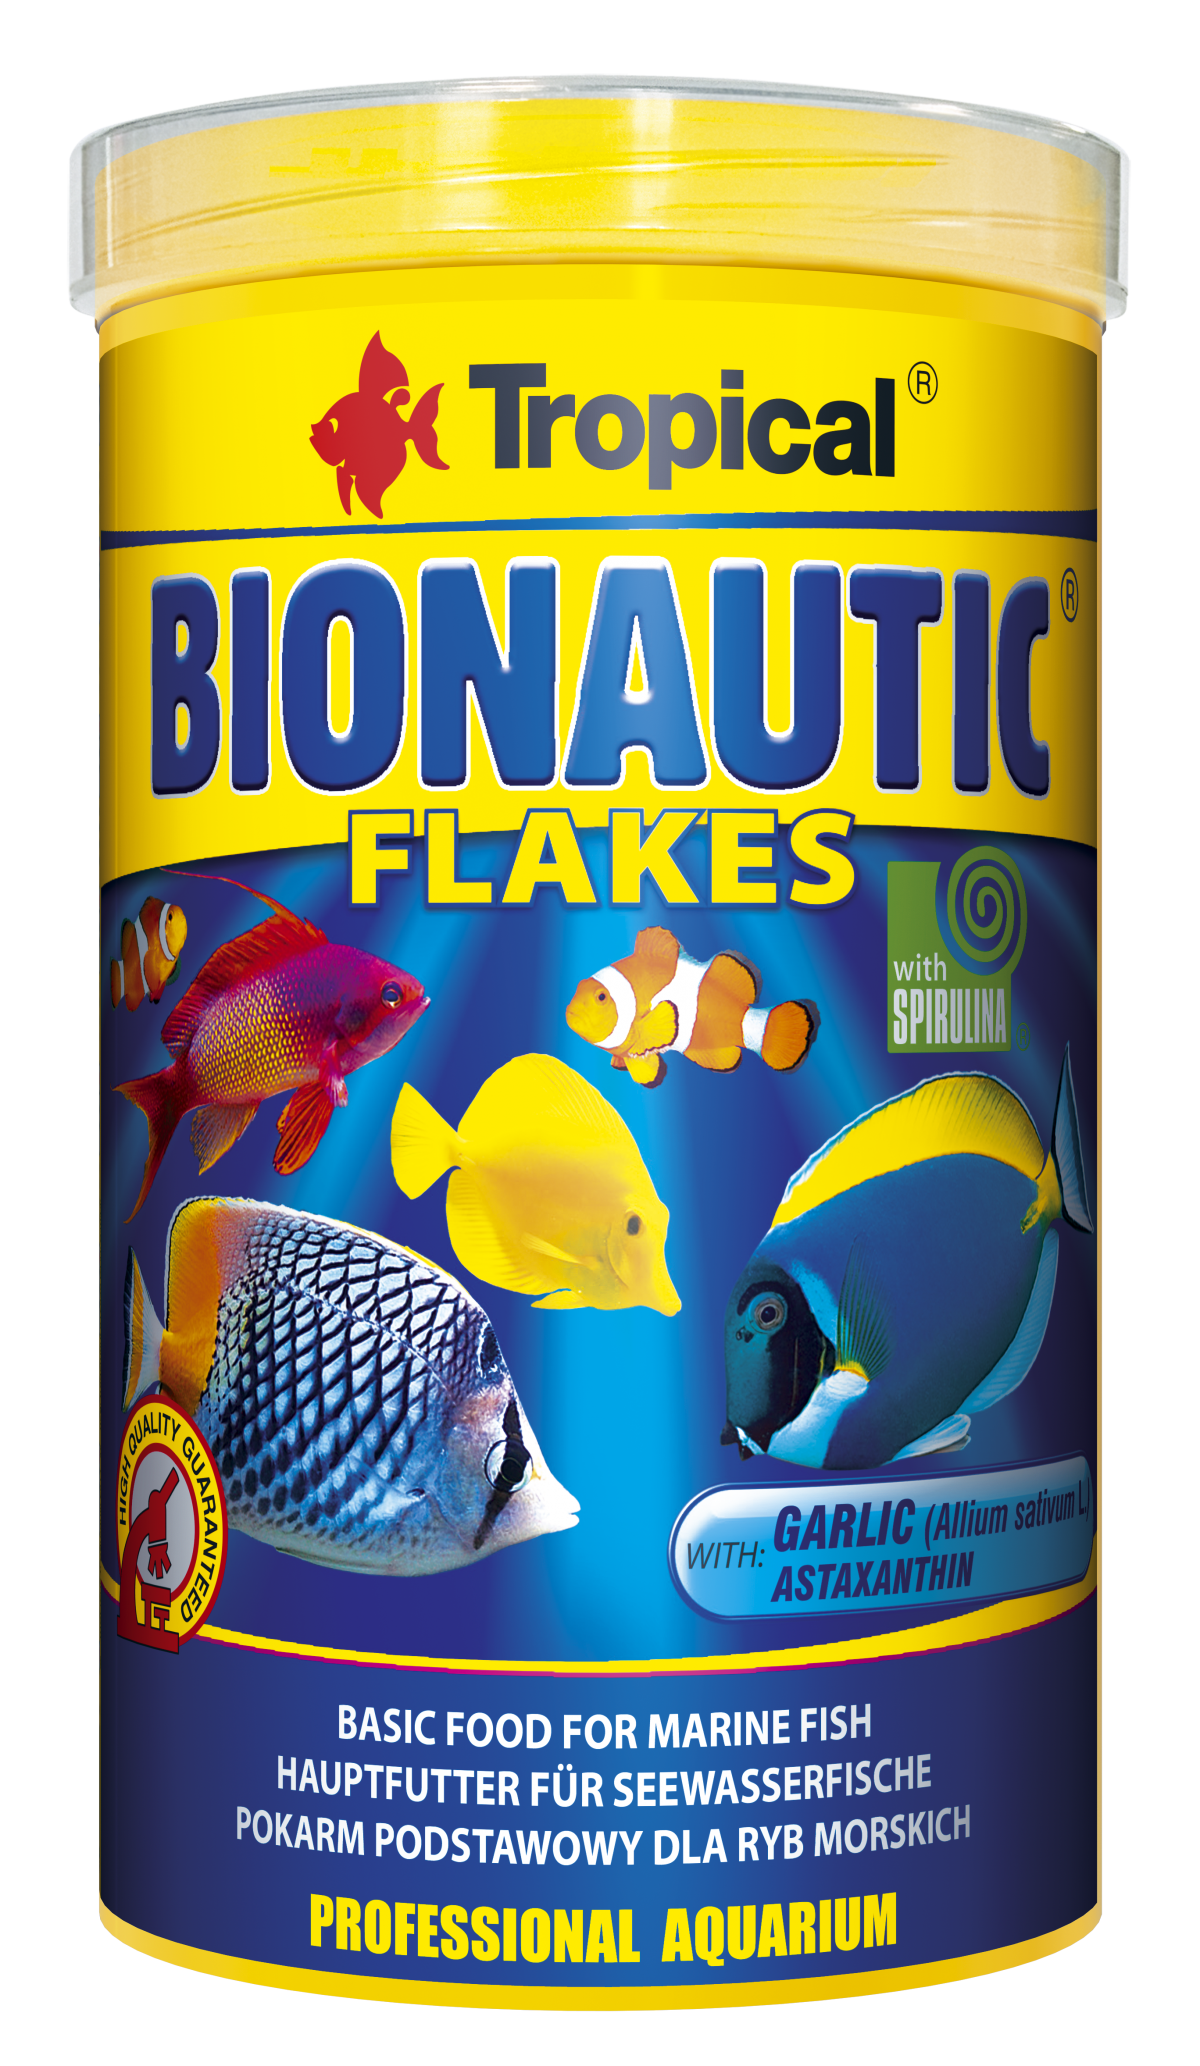 Tropical Bionautic Flakes